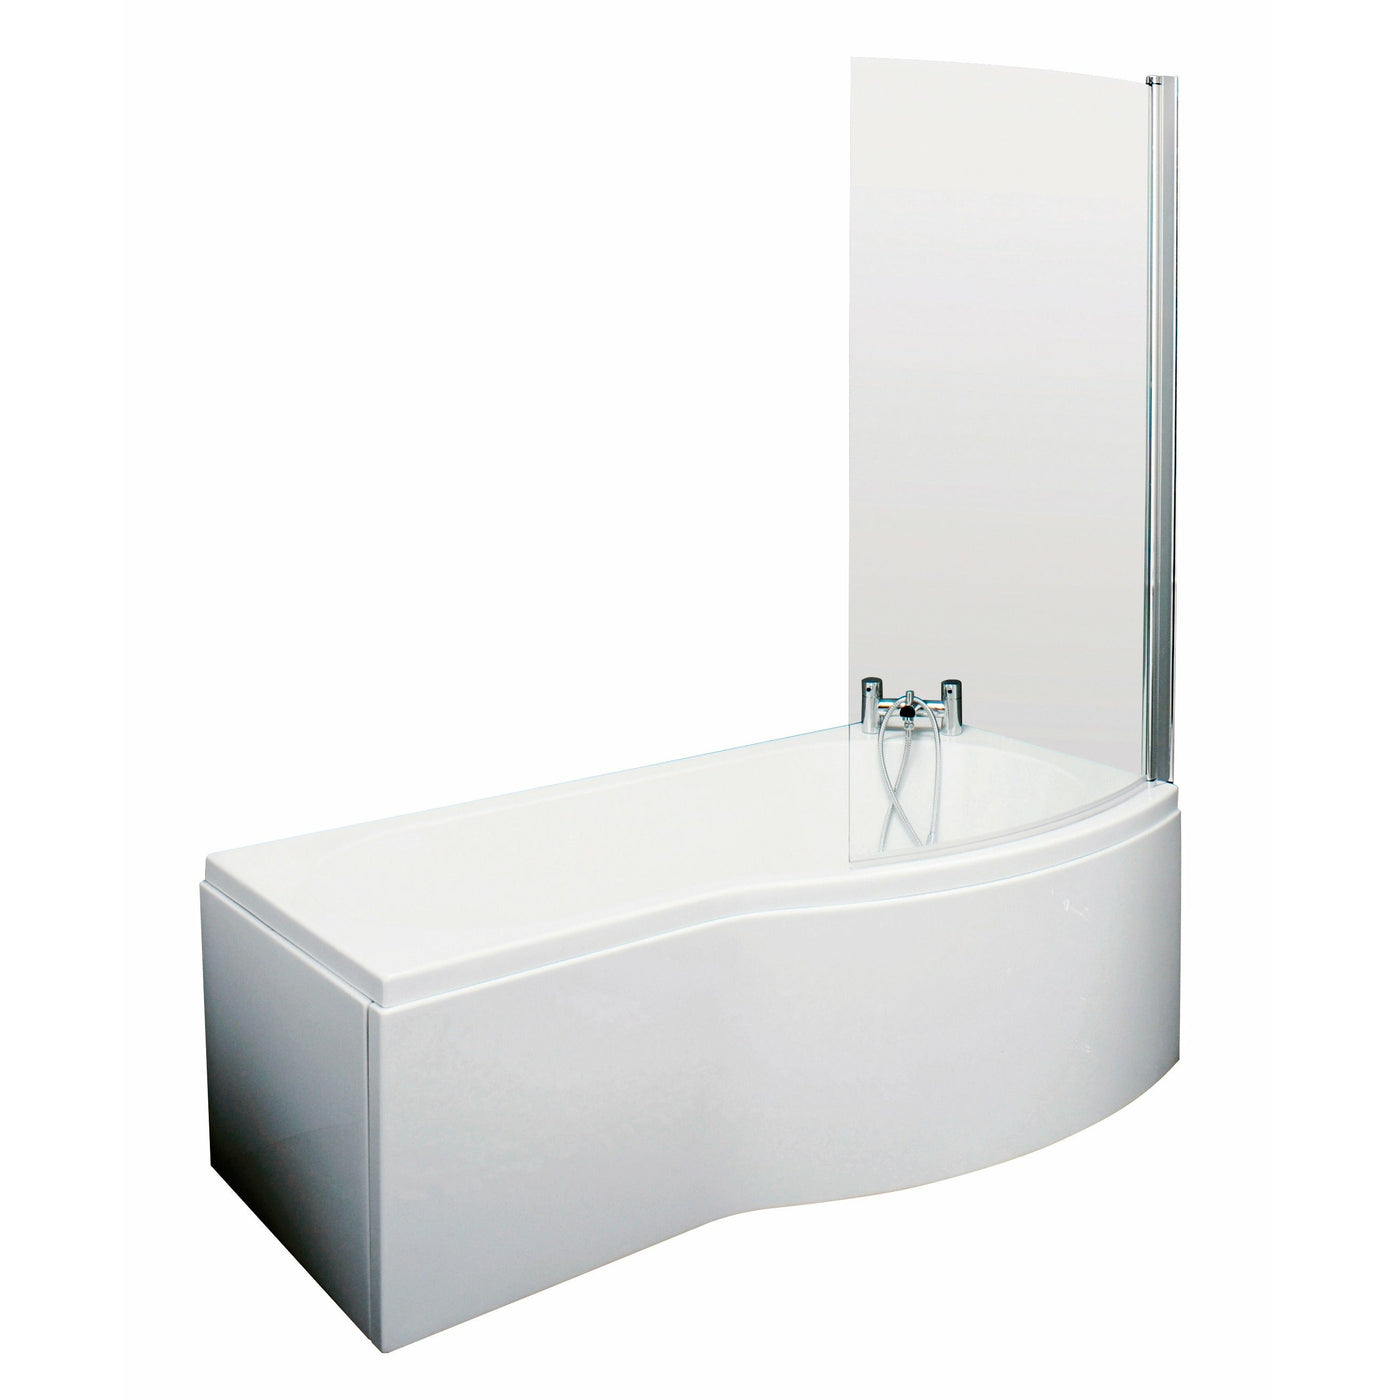 1500mm B Shaped Right Hand Bath Set - Letta London - 